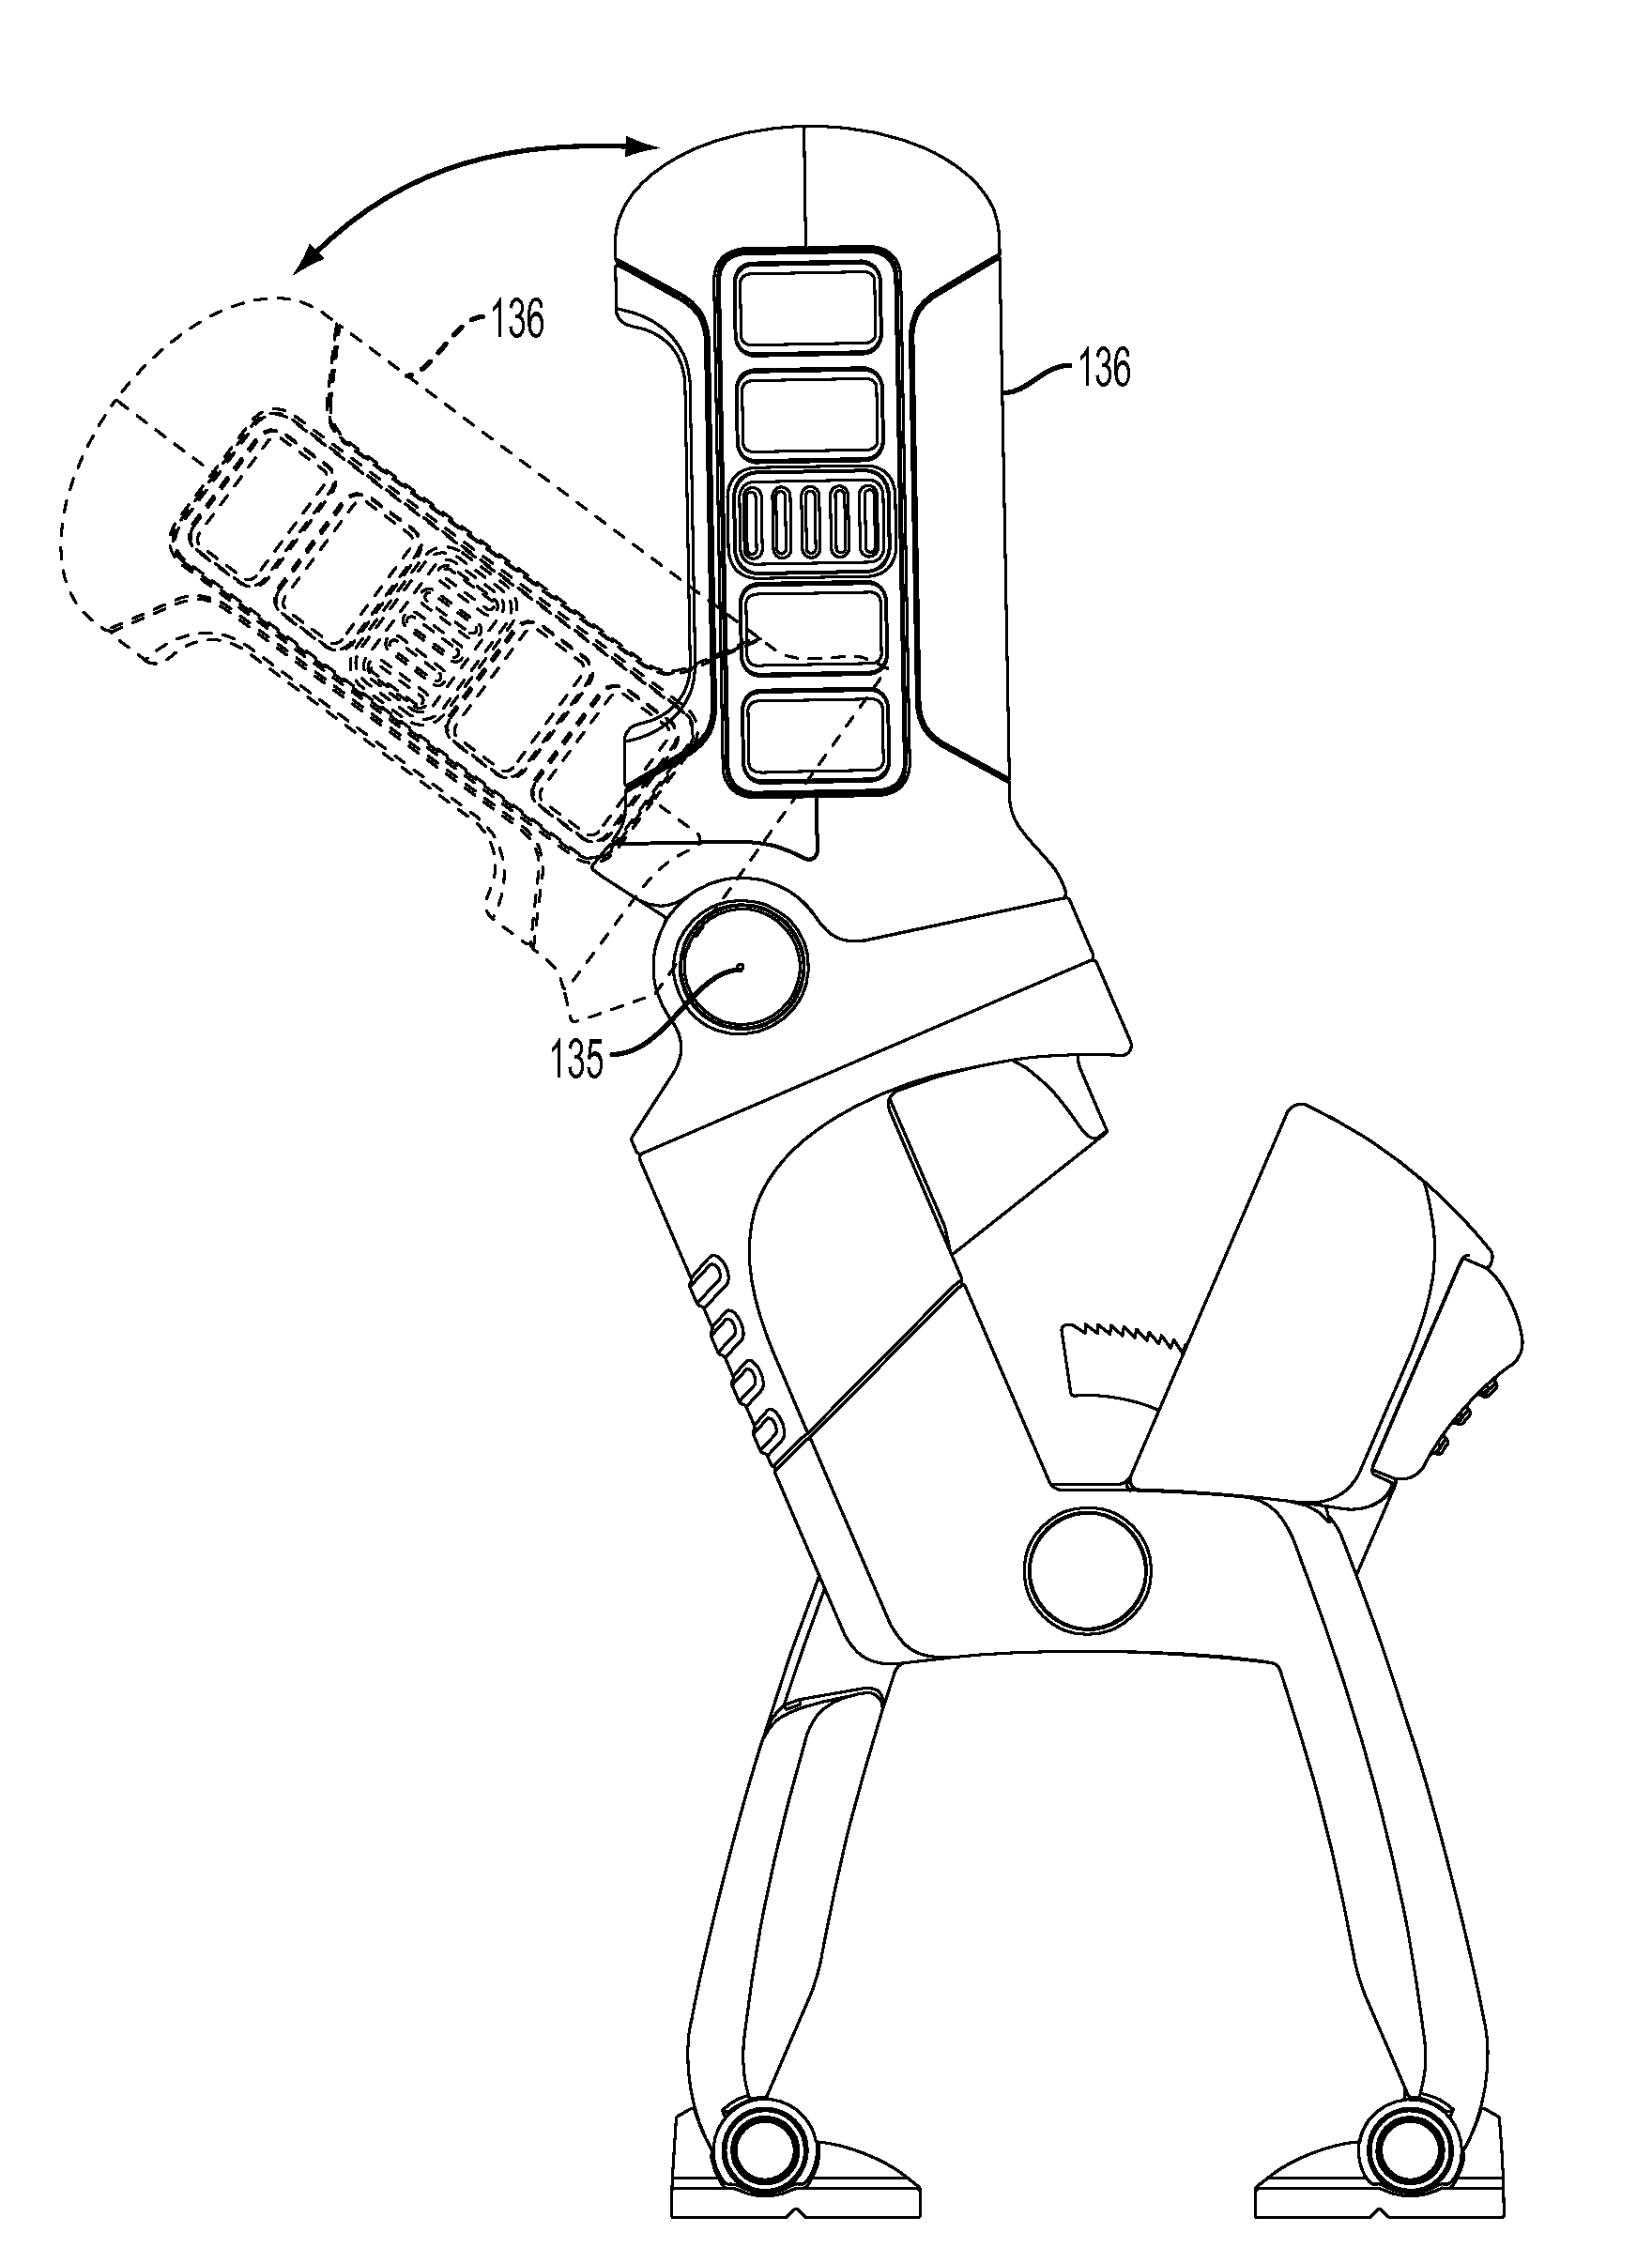 Portable work light clamp